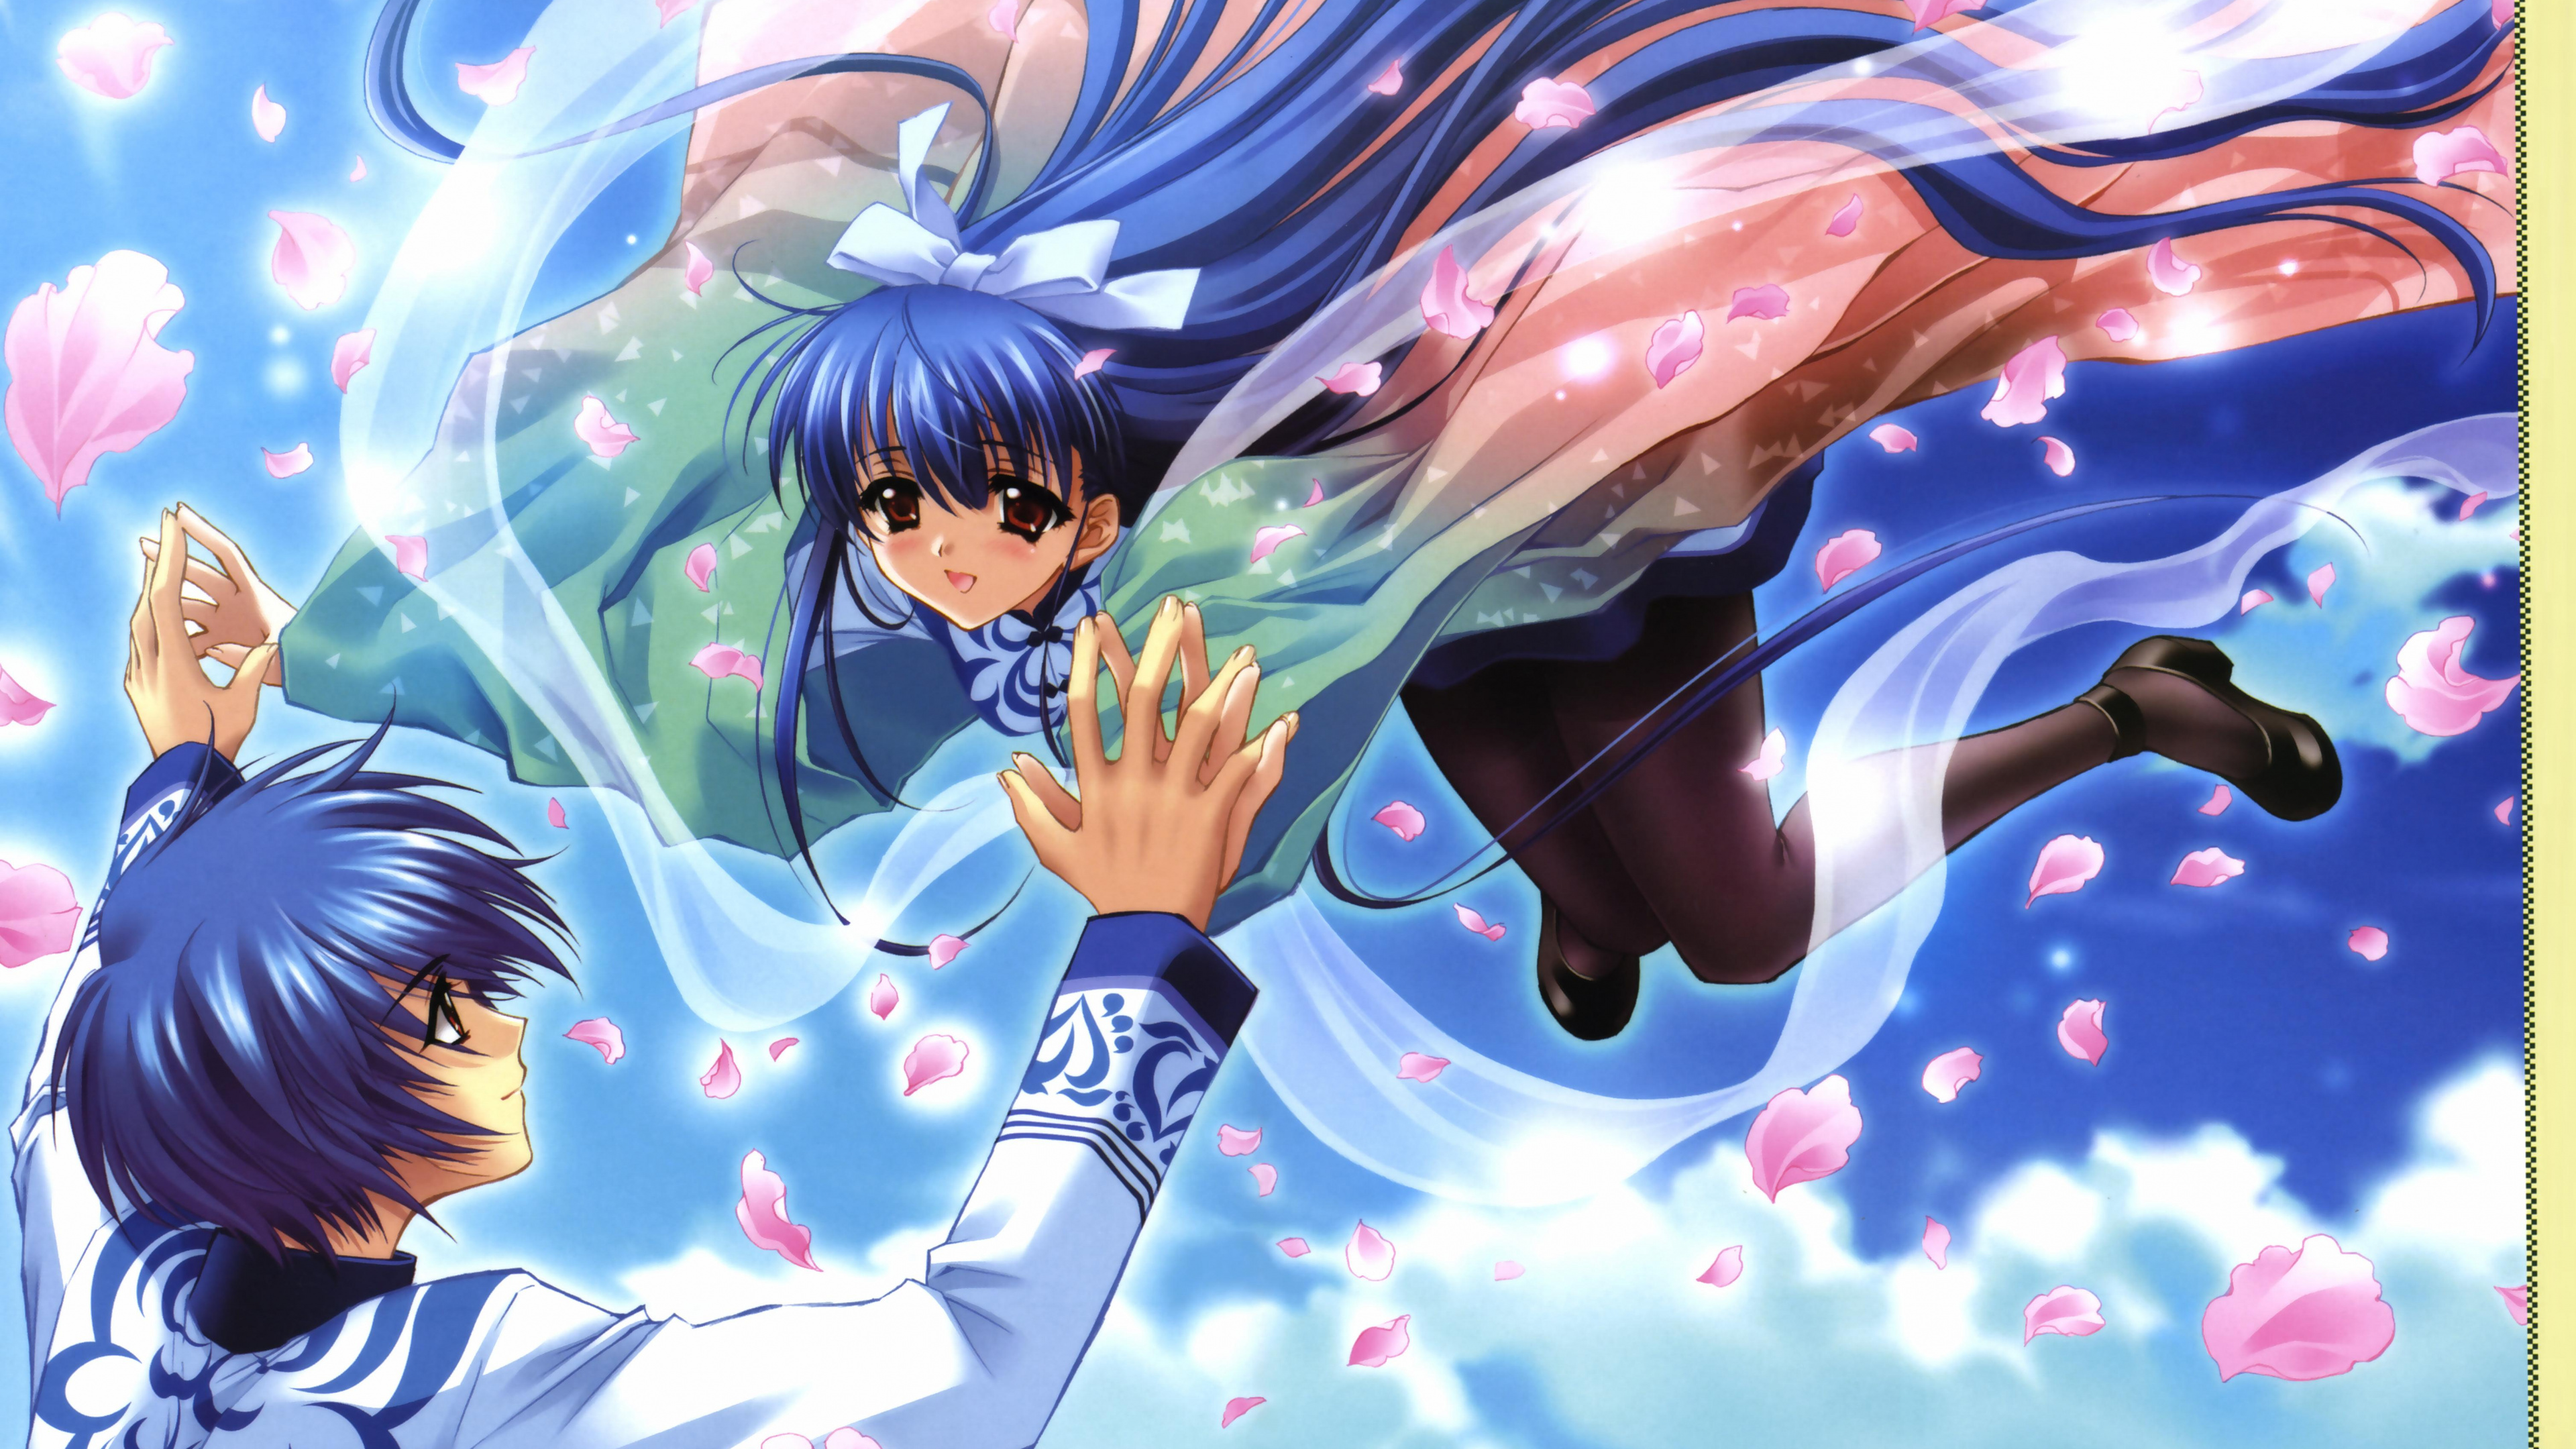 Personaje de Anime Masculino de Pelo Azul. Wallpaper in 3840x2160 Resolution